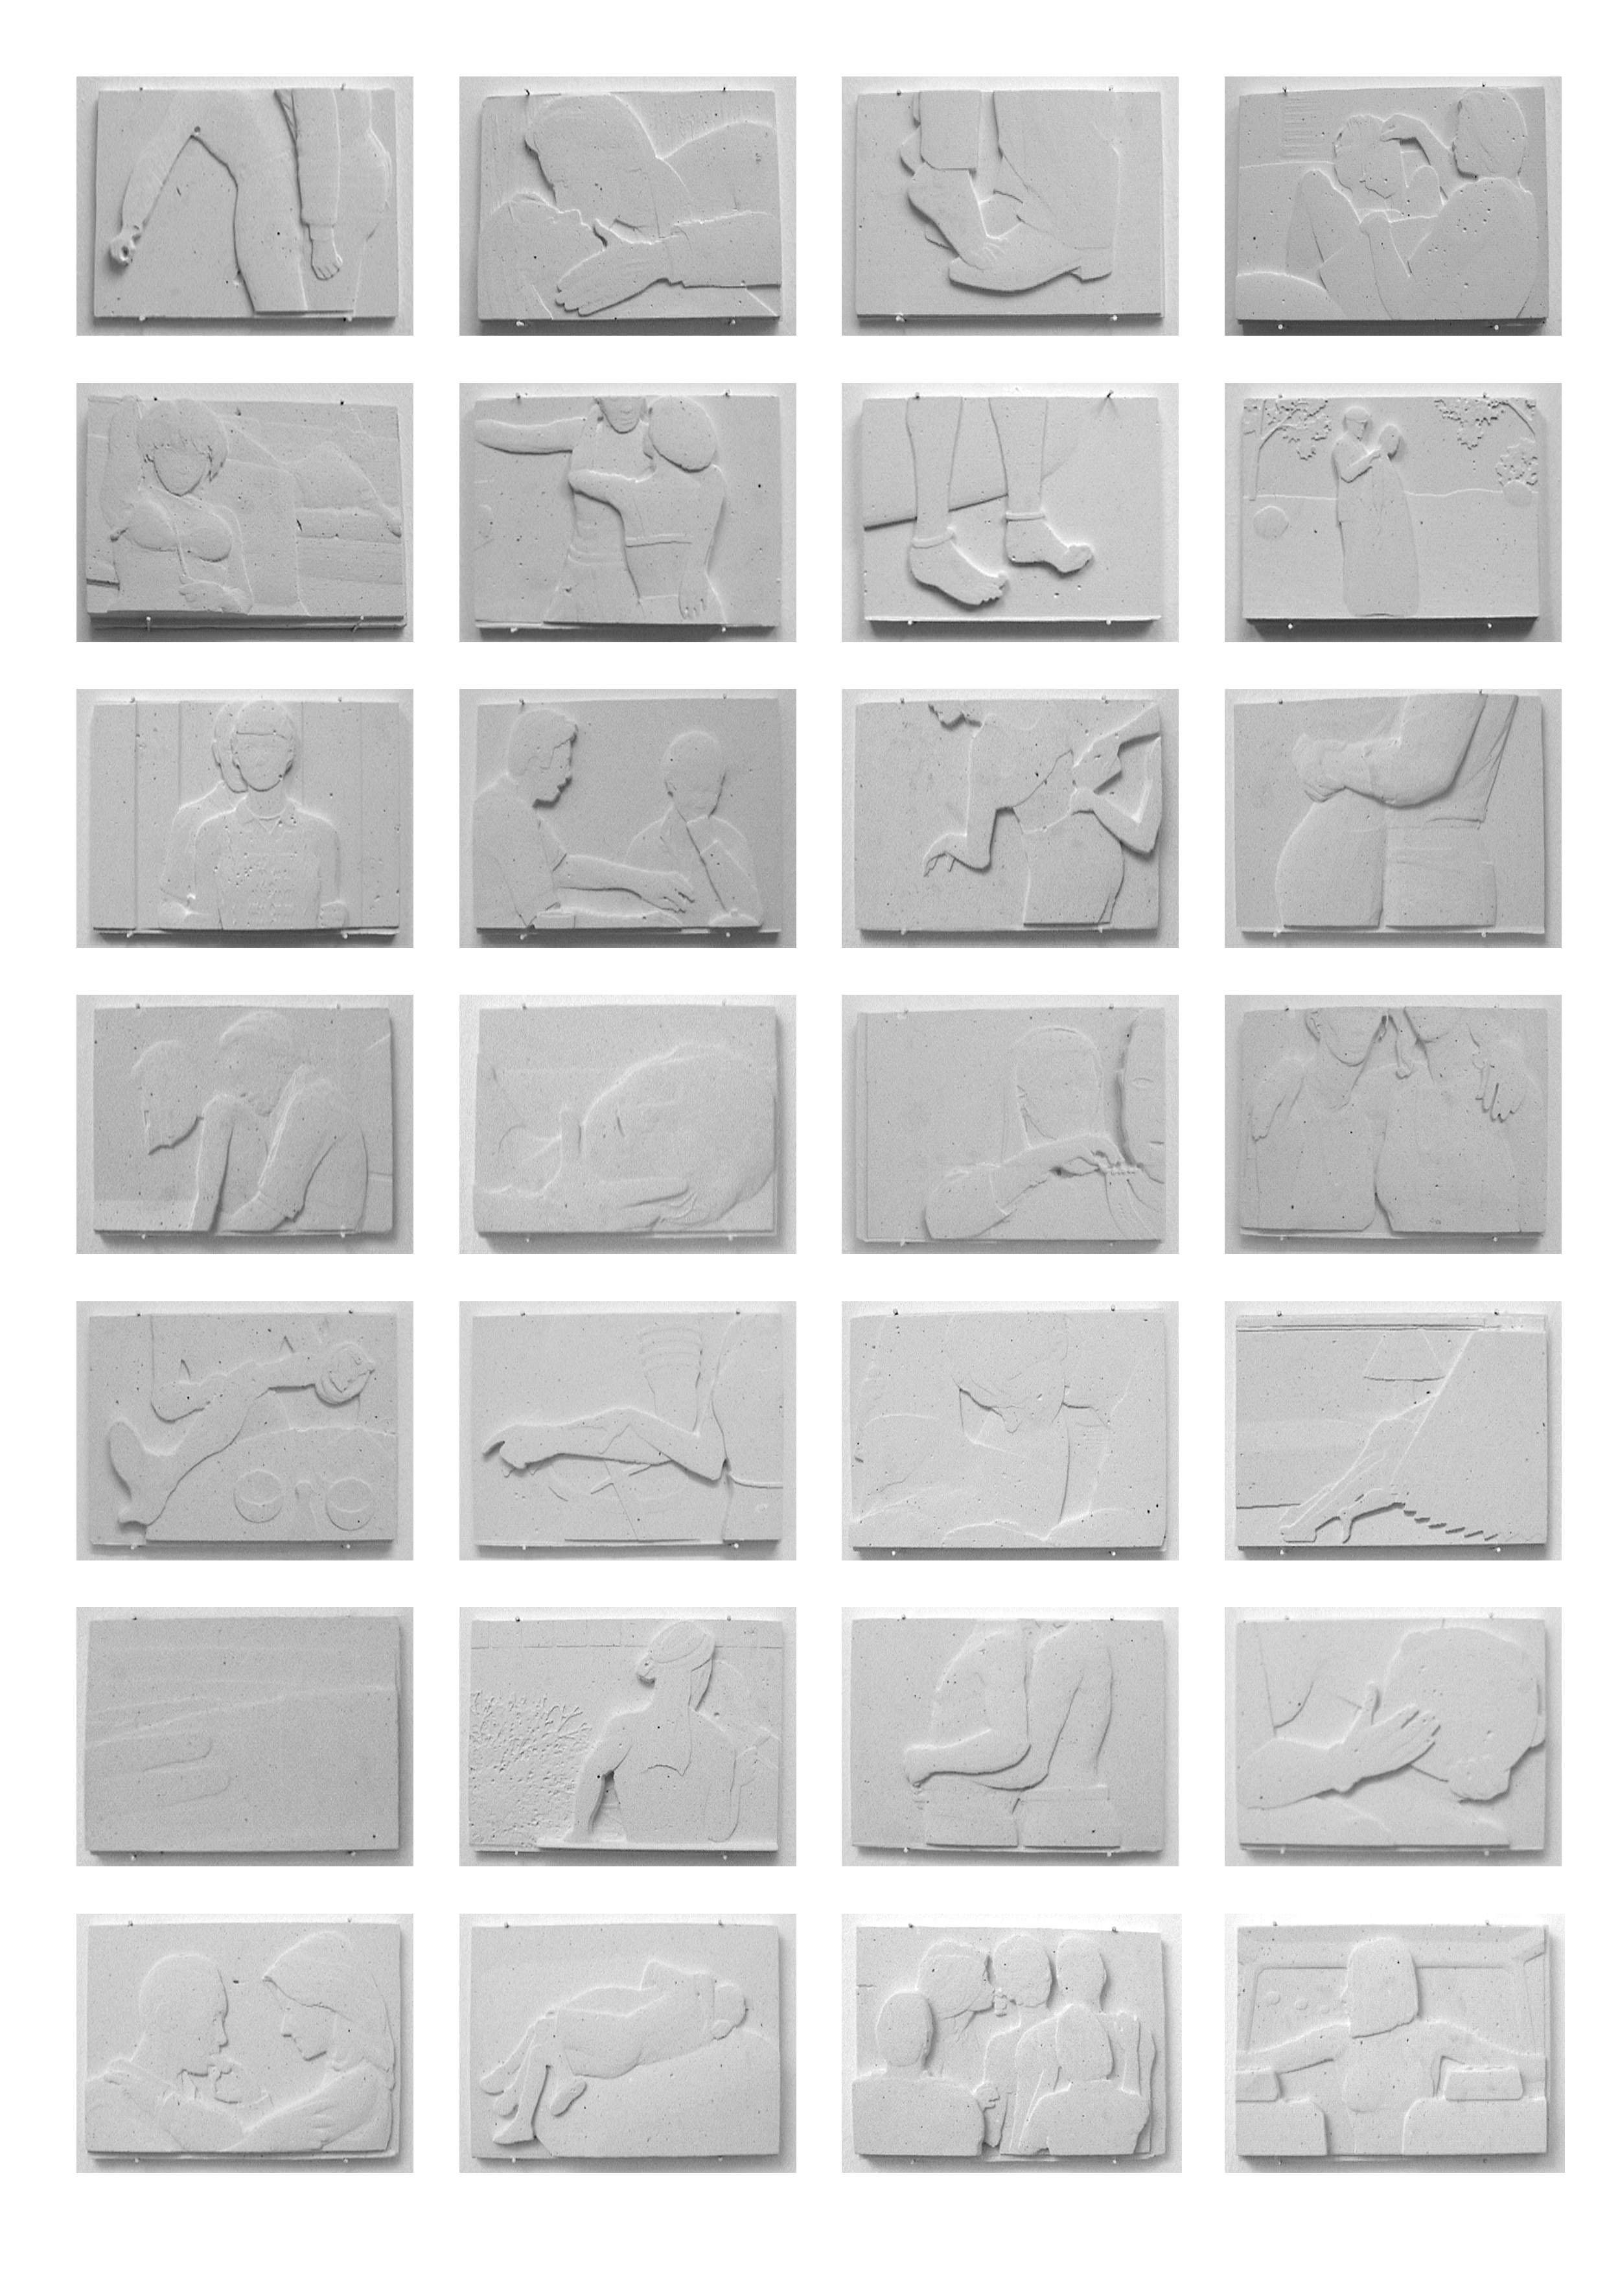  Senza fine/Endless, 2000-2002, Machine modelled plaster bas-reliefs, 35 elements, created for the Venice Biennale, 2002, Harald Szeemann 